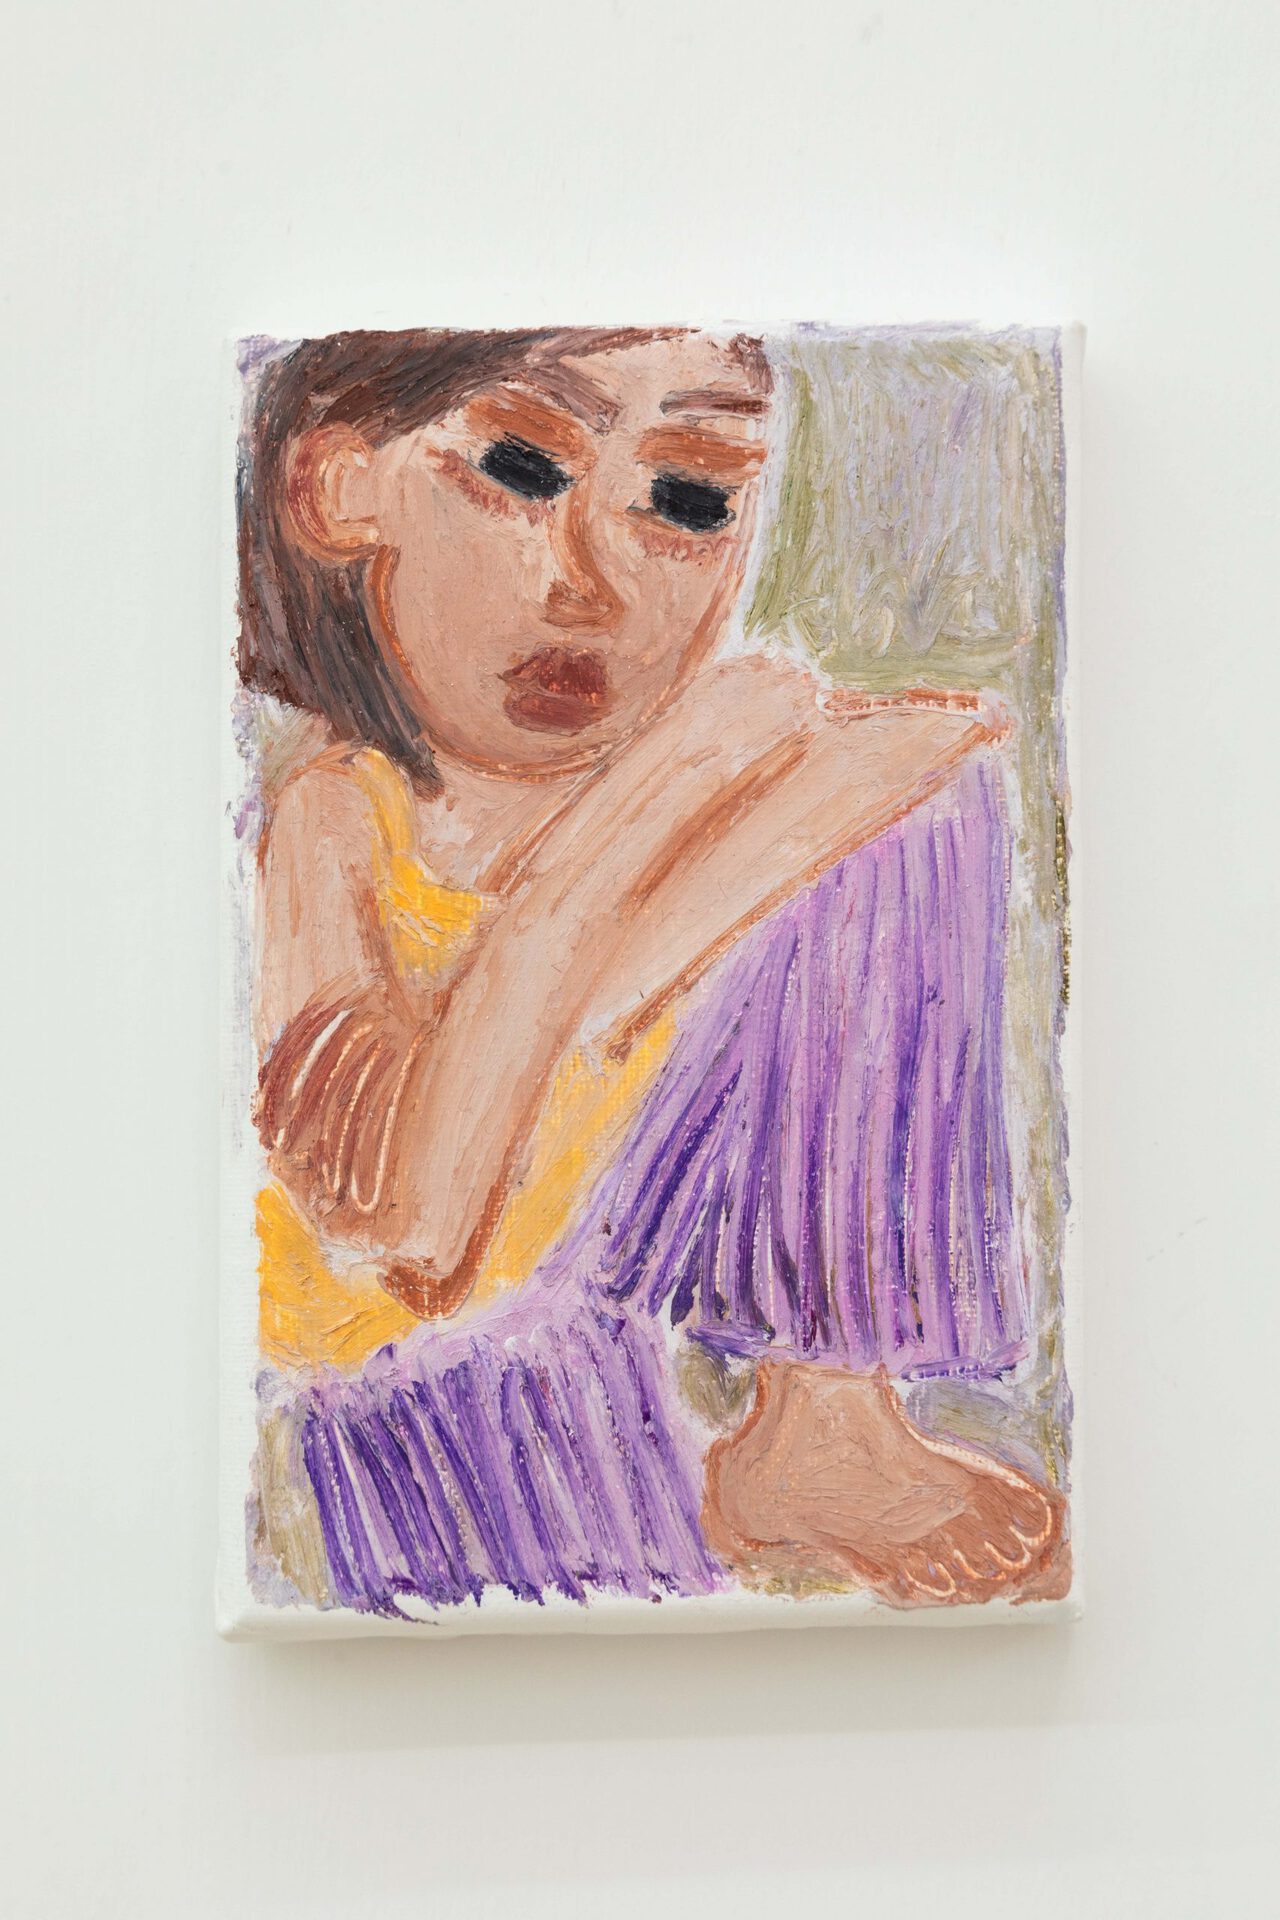 Tatiana Defraine, the cruising cloud, 2021, Oil Pastel on canvas, 15x10cm